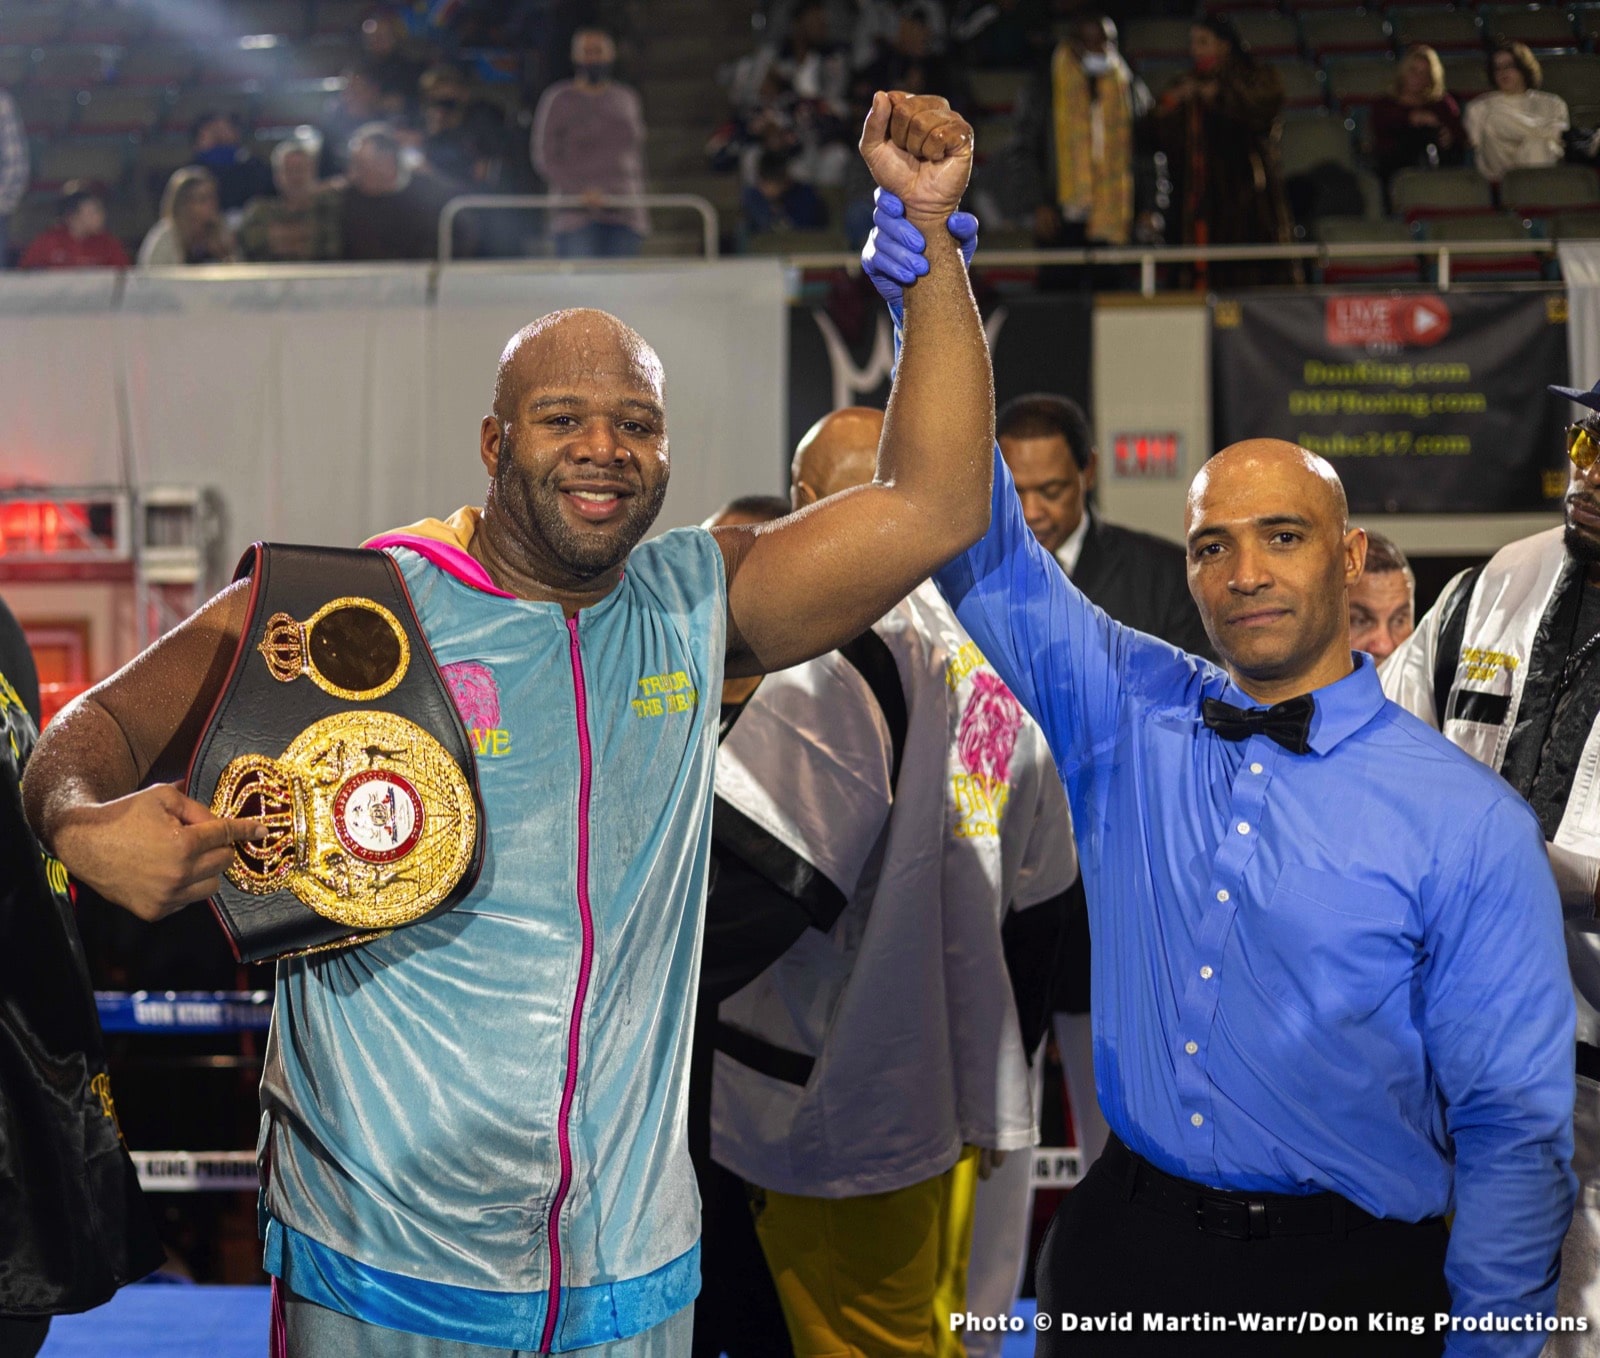 Image: Results / Photos: Ilunga Makabu & Trevor Bryan Retain World Titles In Ohio